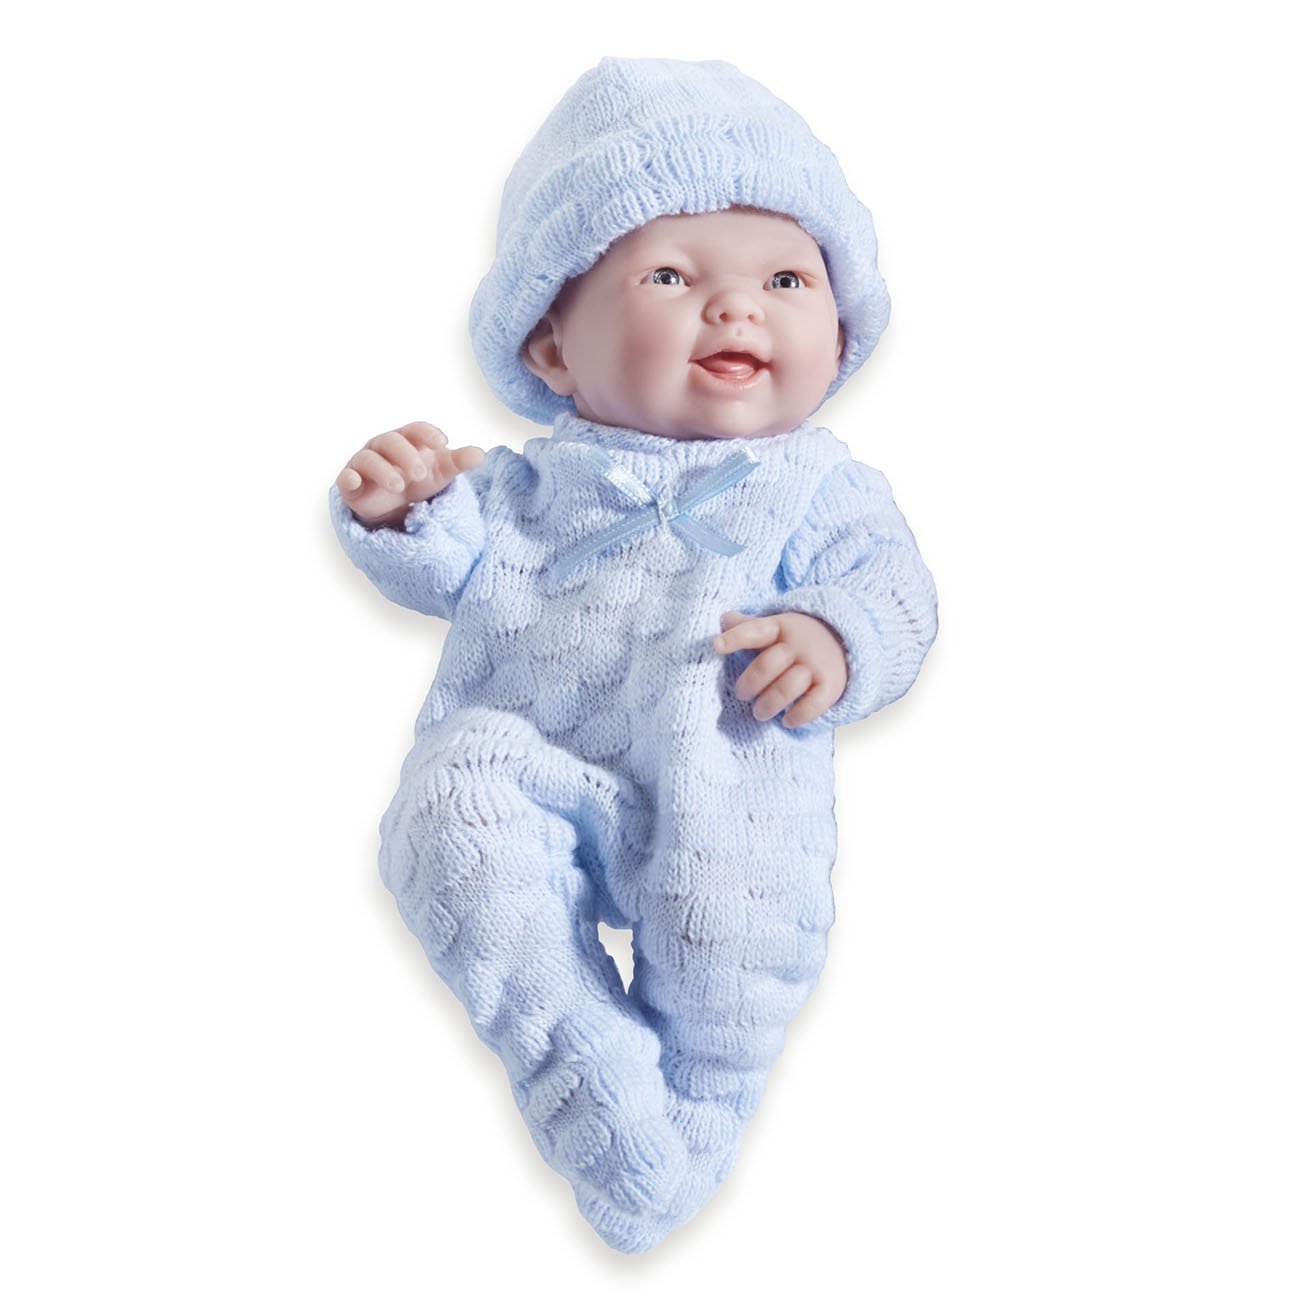 JC Toys Mini La Newborn Real Boy Baby Doll 9.5" All-Vinyl in Blue Knit onesies